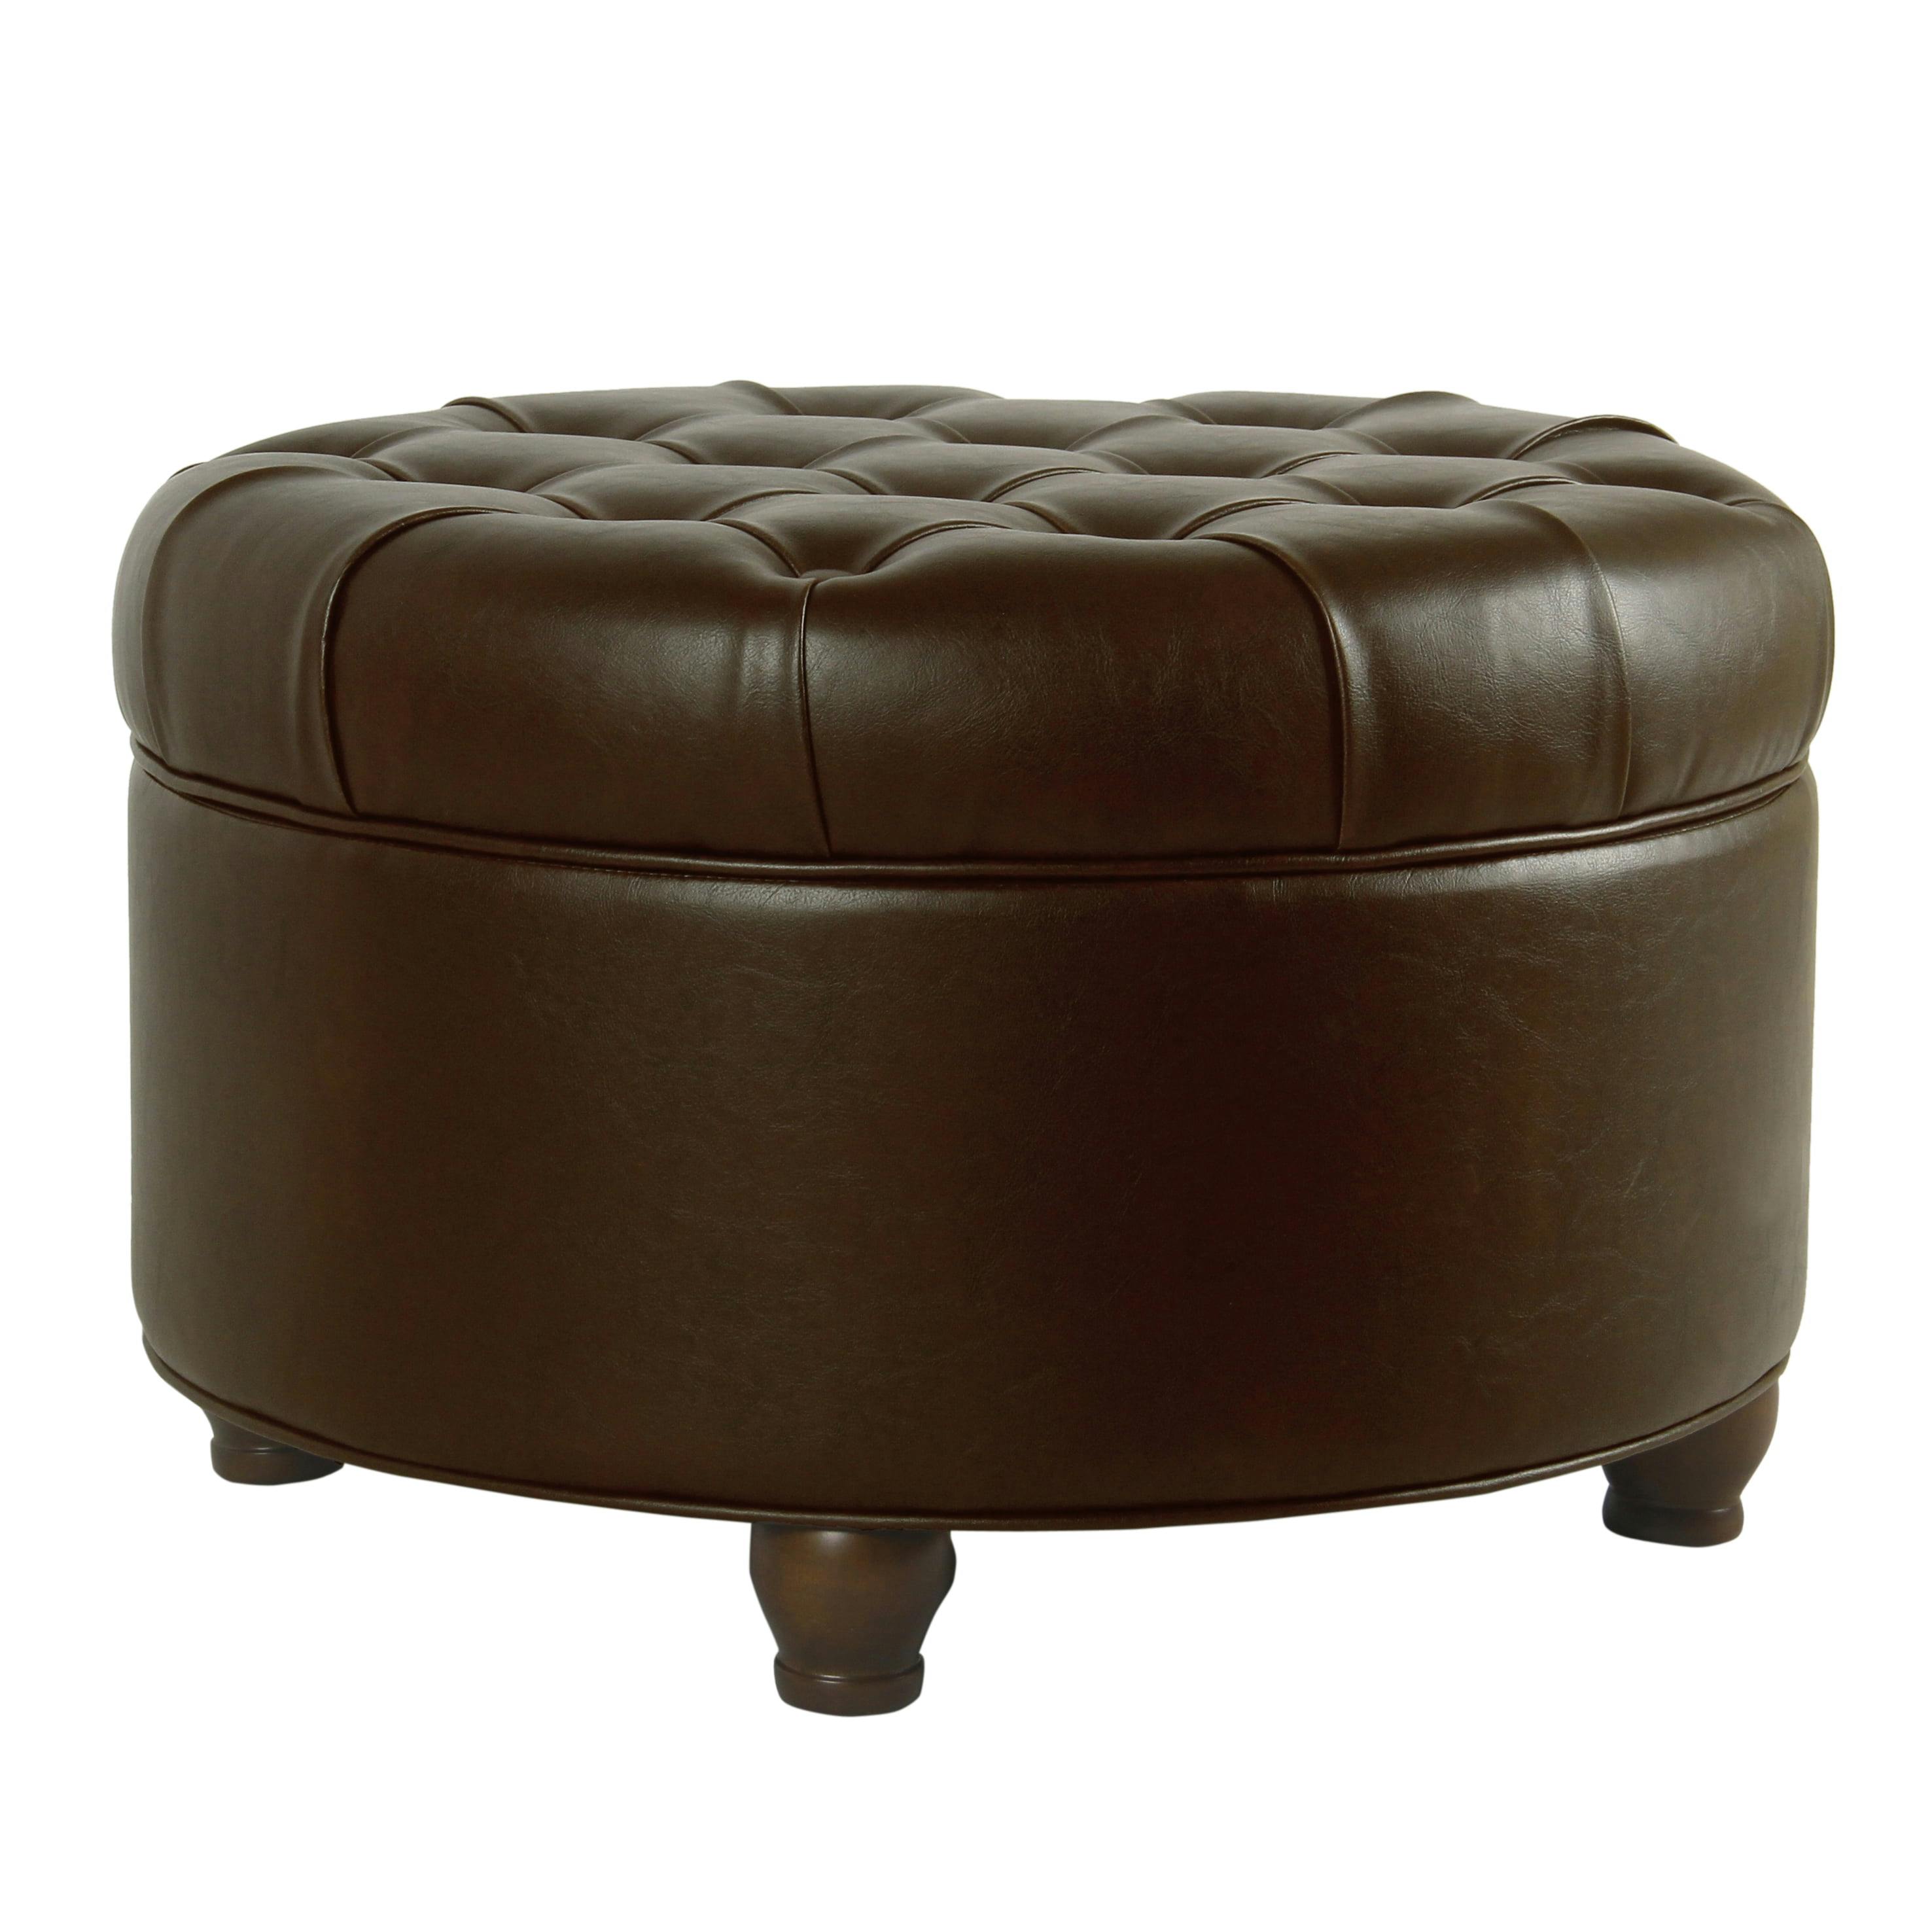 Elegant Tufted Faux Leather Round Ottoman with Storage